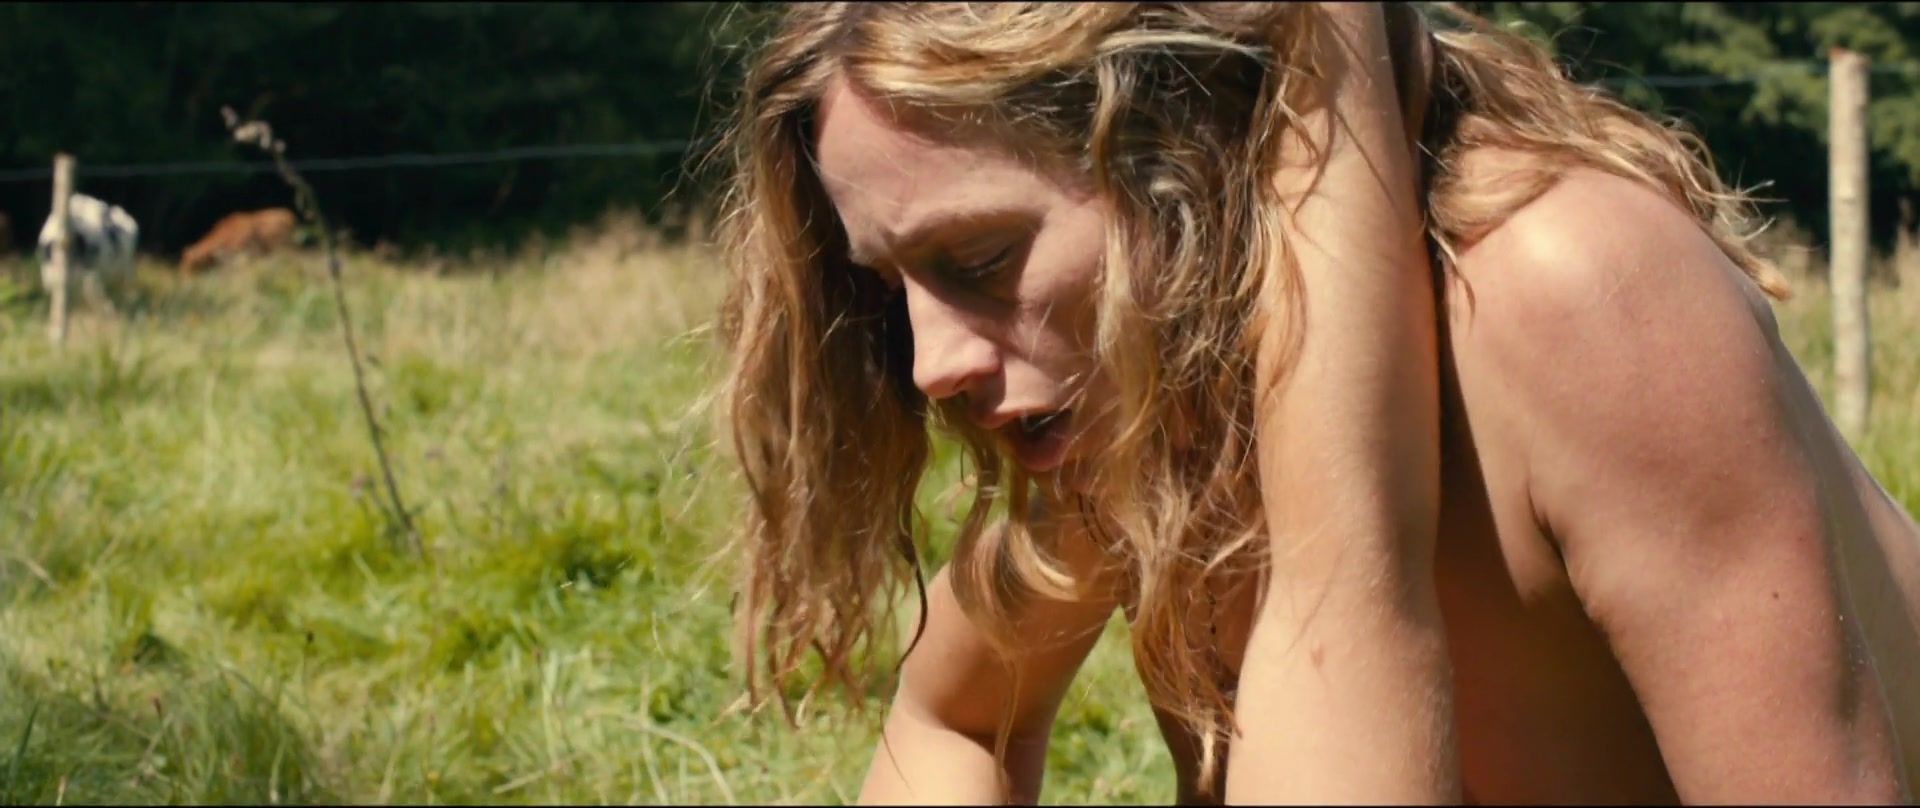 ExtraTorrent Outdoors Lesbian Sex Video of French erotic film "La belle saison" Hymen - 1